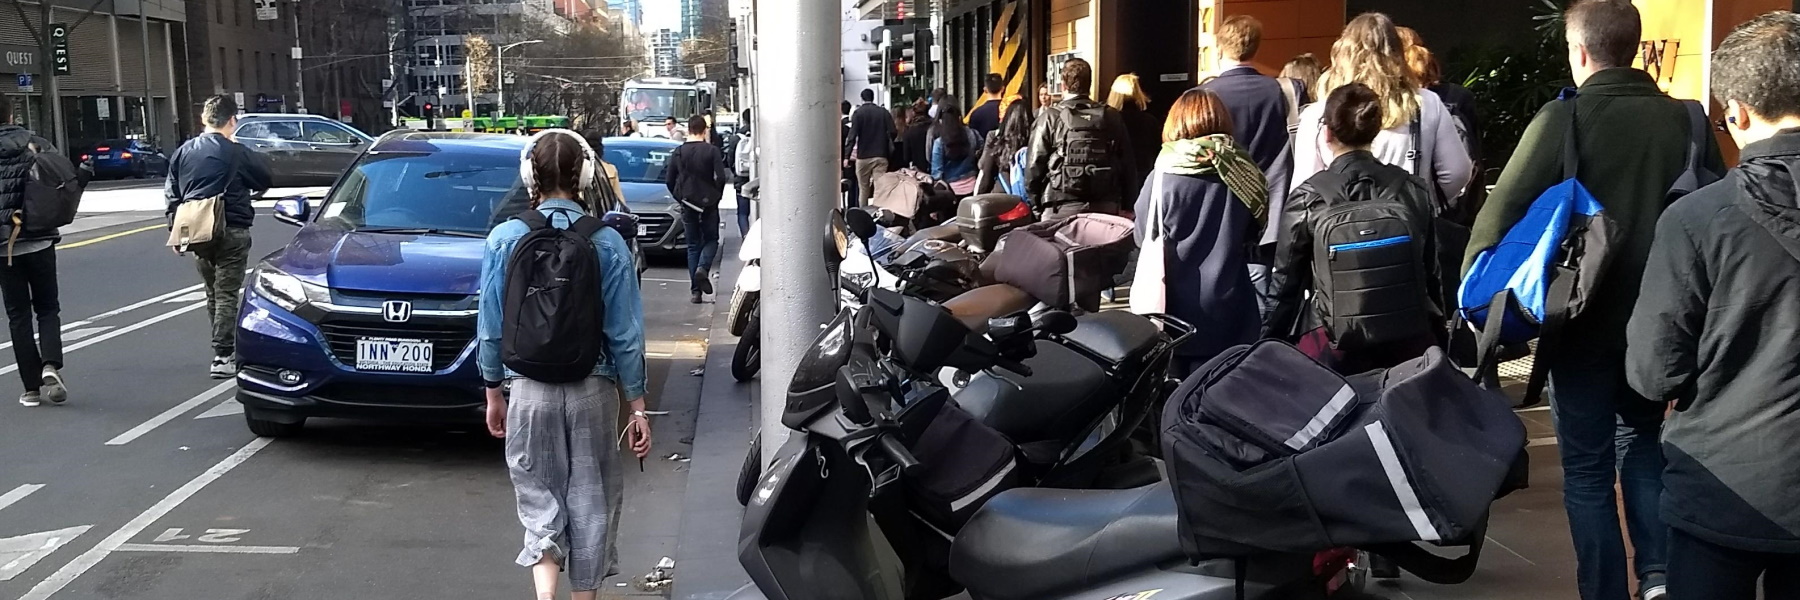 Motorcycles blocking footpath, William Street